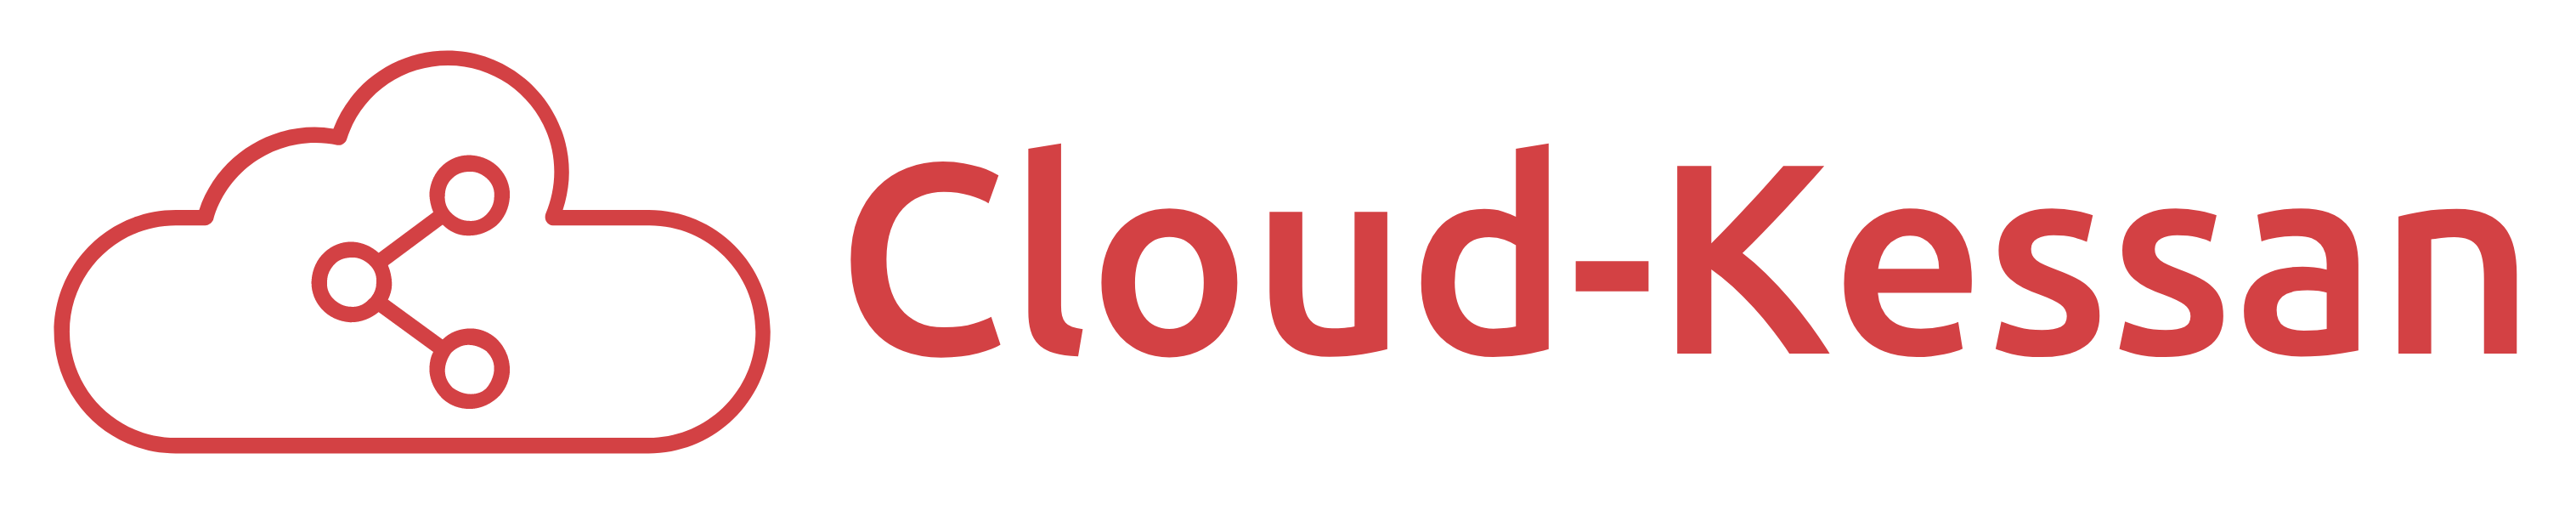 Cloud-kessan：フリーランス・スモールビジネス経営者向けWebサイト